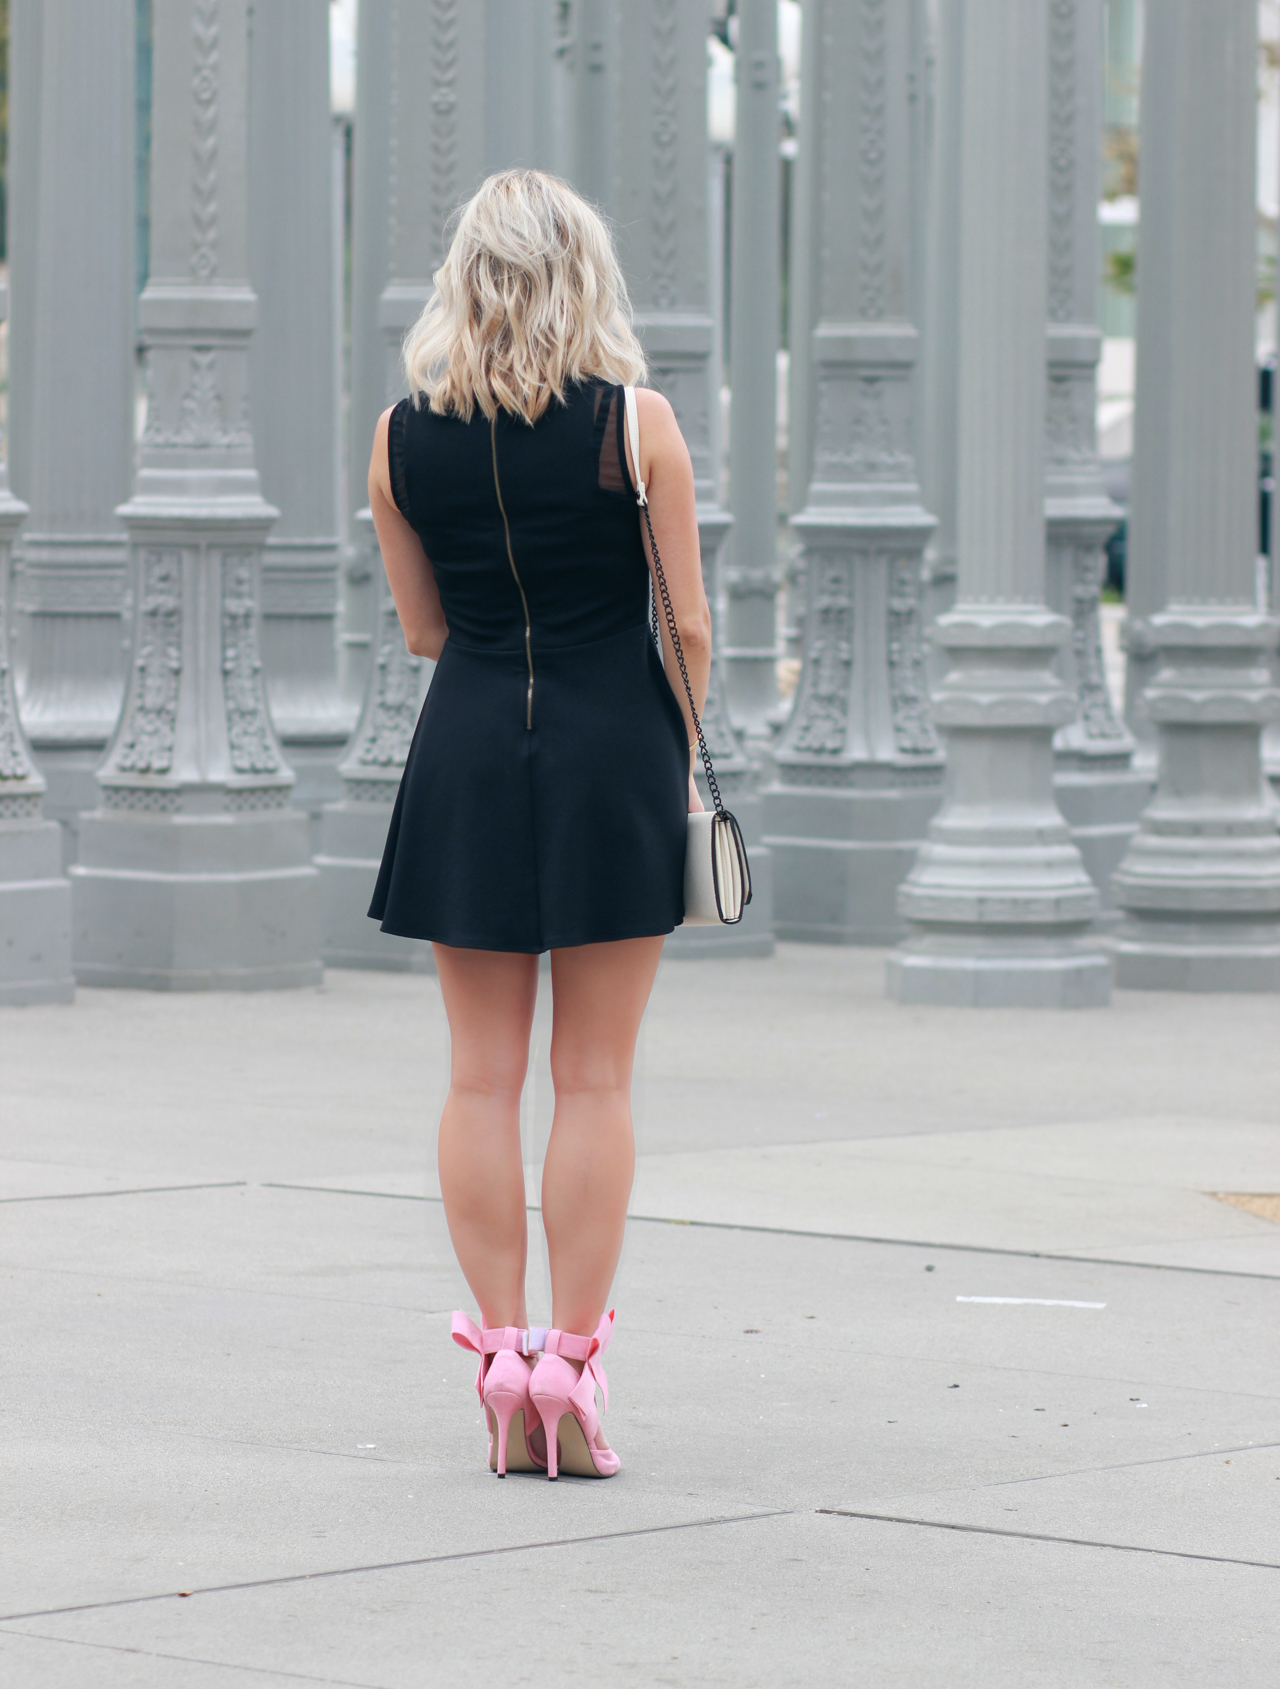 Black Skater Dress & Pink Heels | StyledByBlondie.com